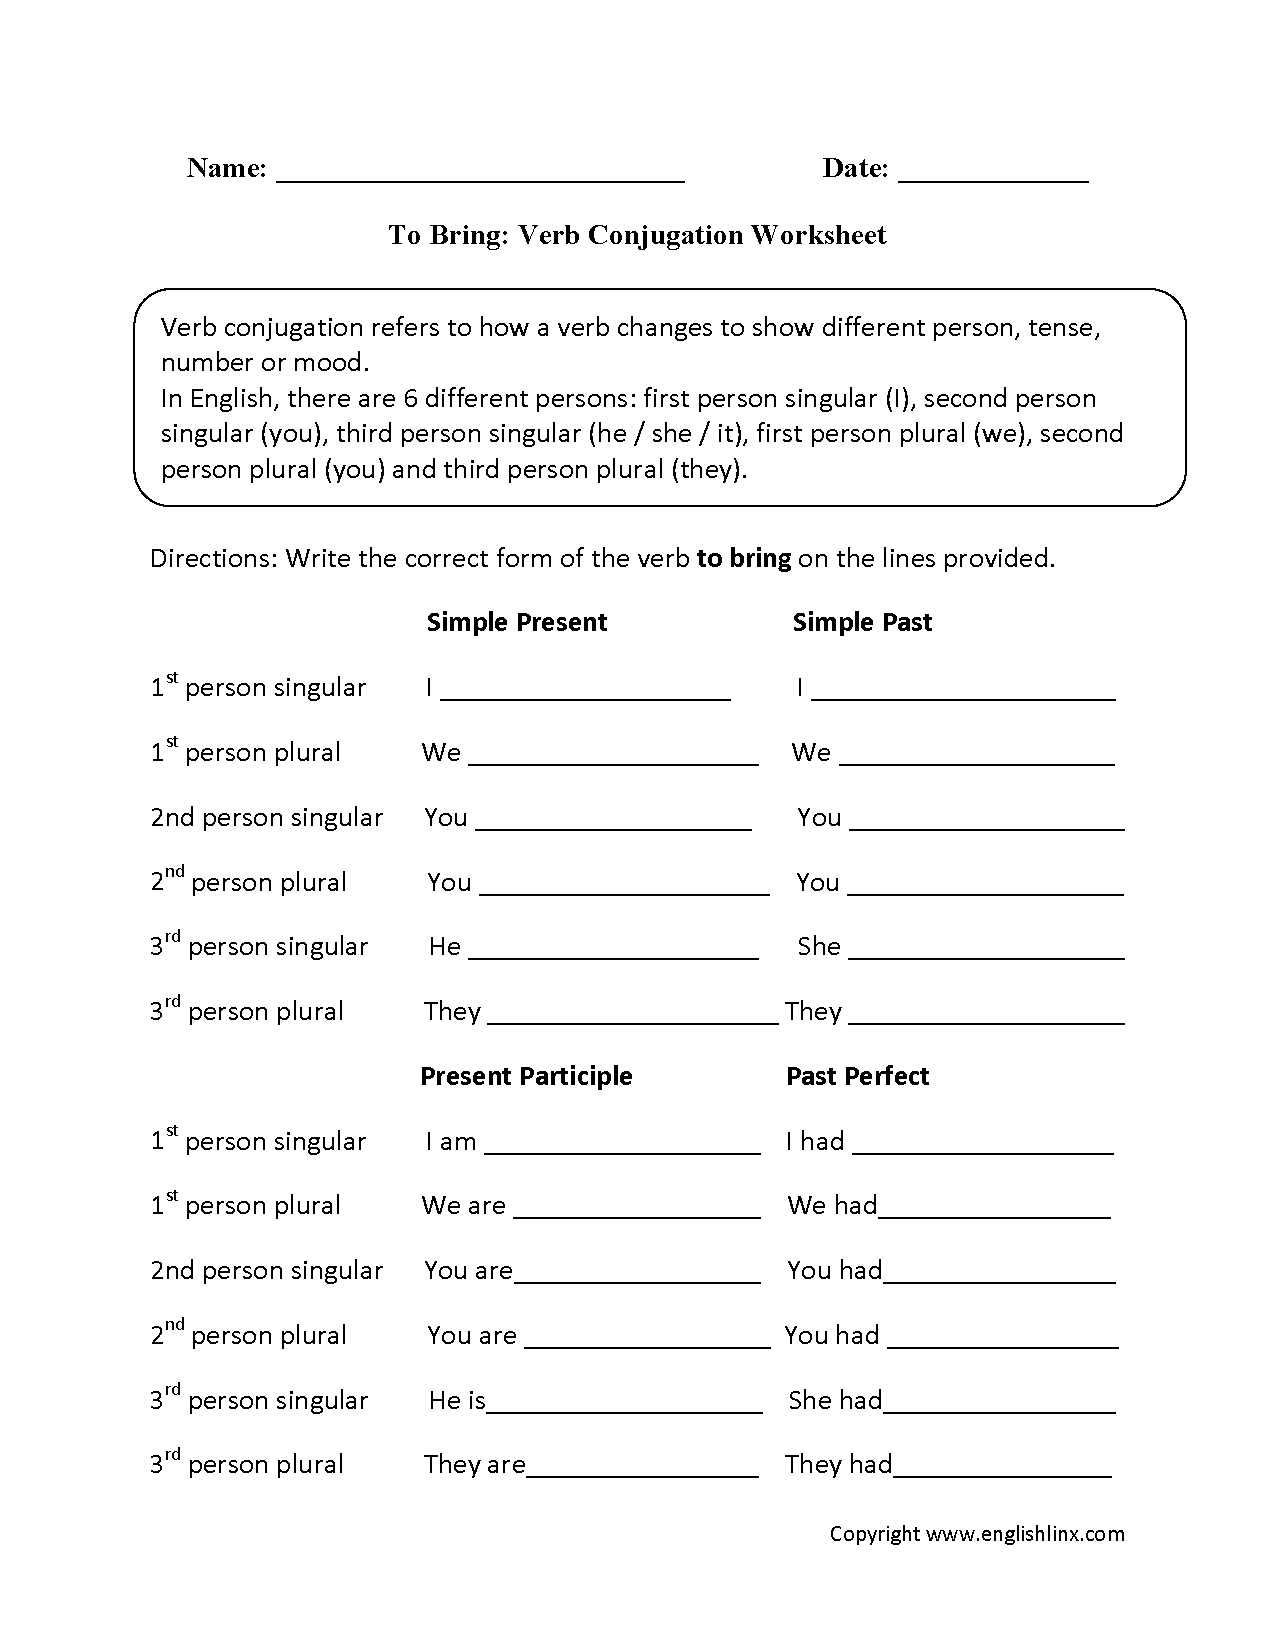 To Bring Verb Conjugation Worksheets